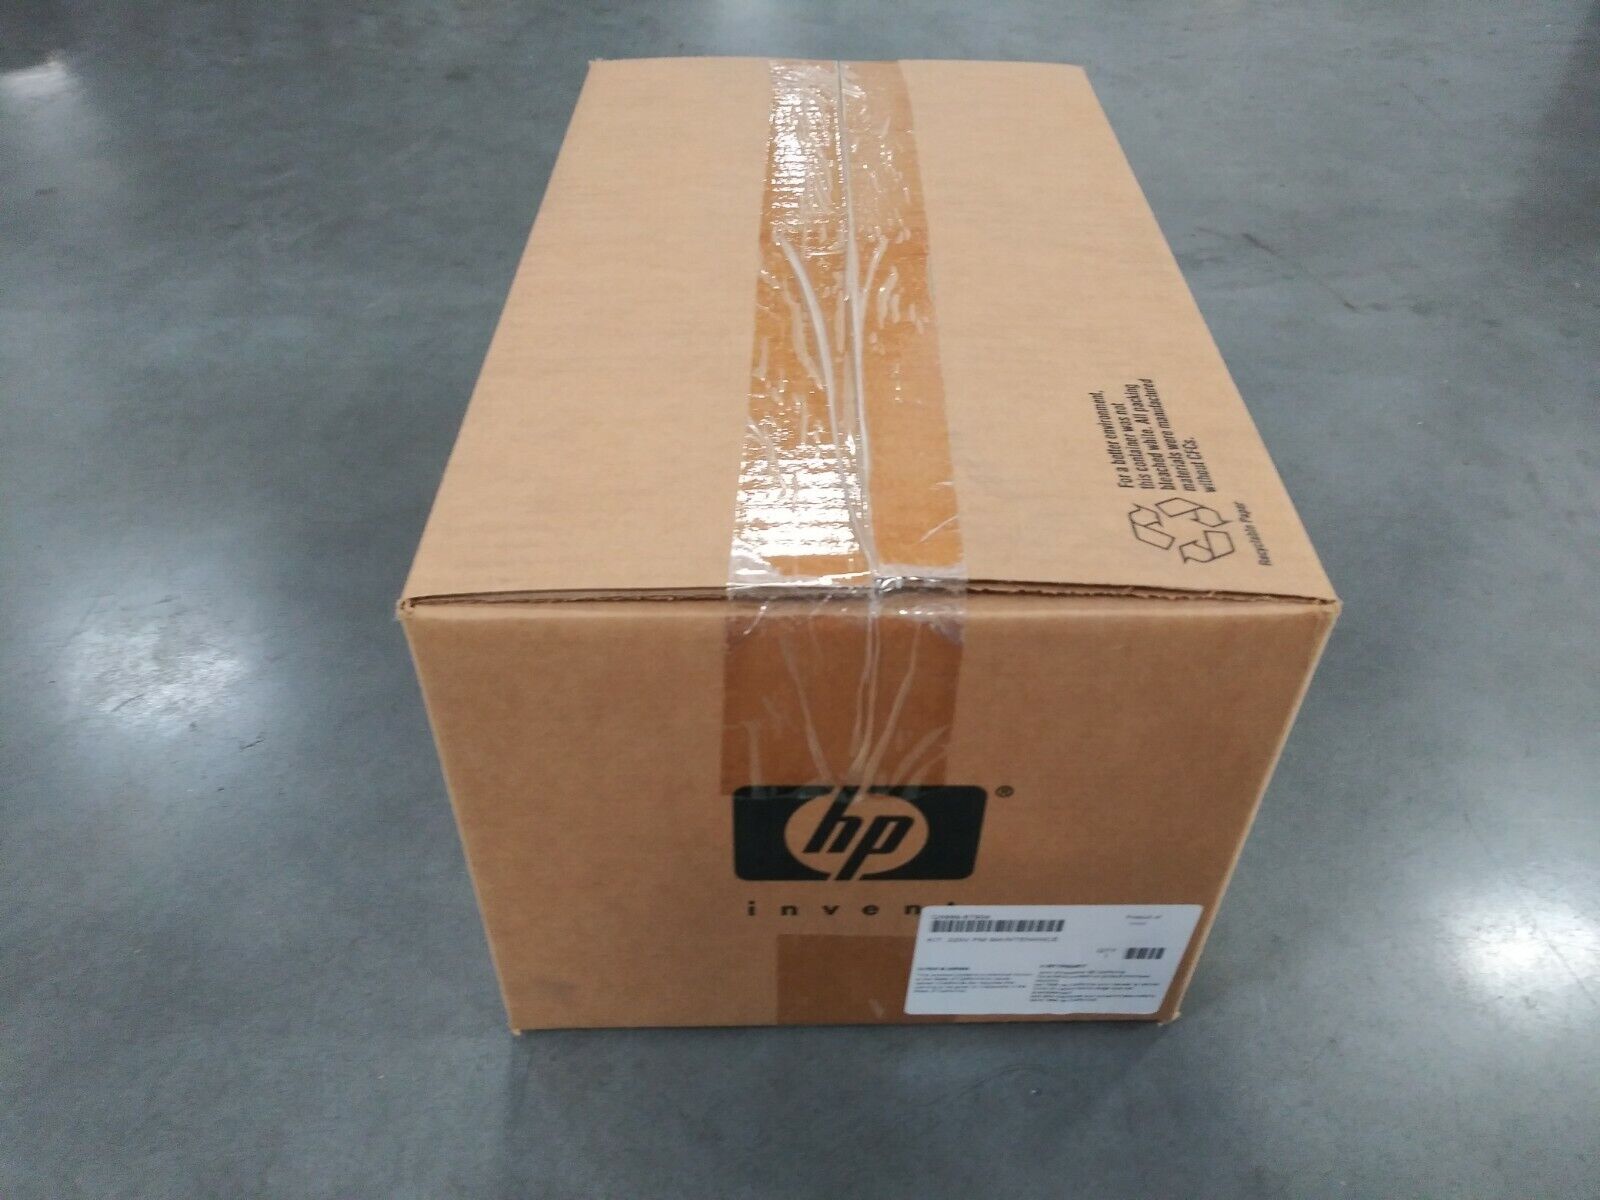 *NEW* Genuine HP Q5999A 220V LaserJet 4345 M4345 220V Maintenance Kit 220V